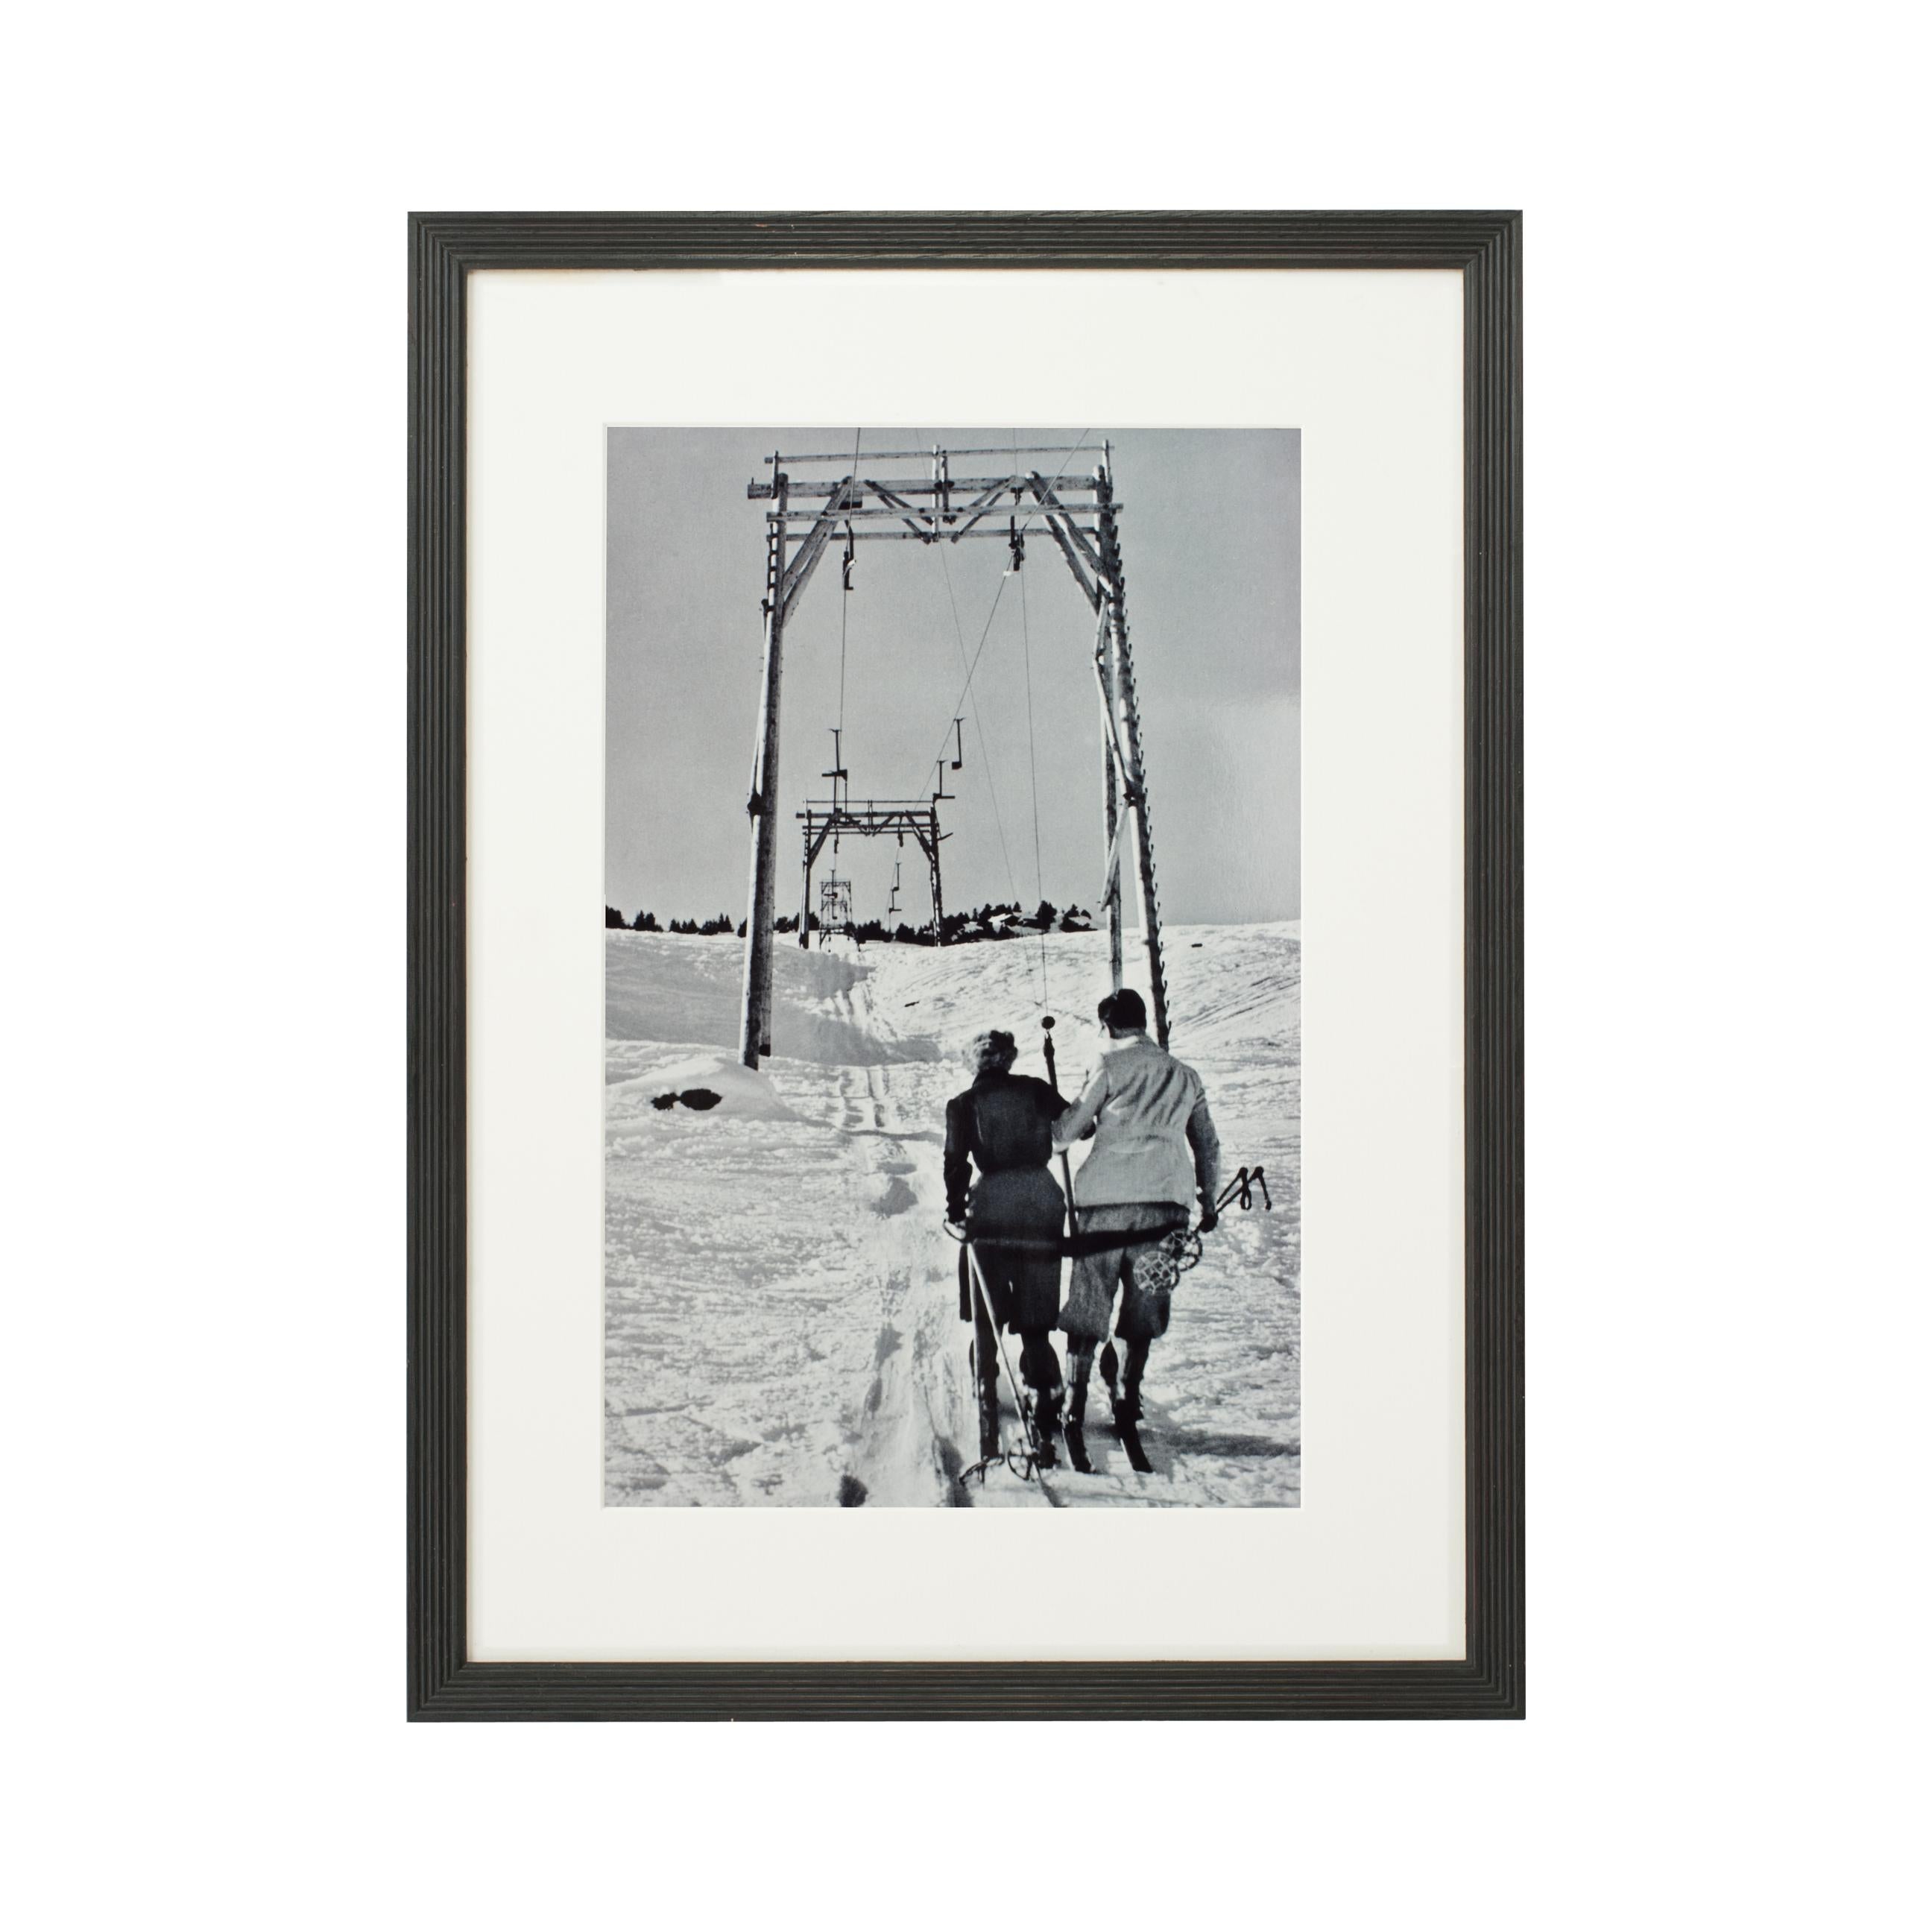 Alpine Ski Photograph, 'THE LIFT' Taken from 1930s Original 1